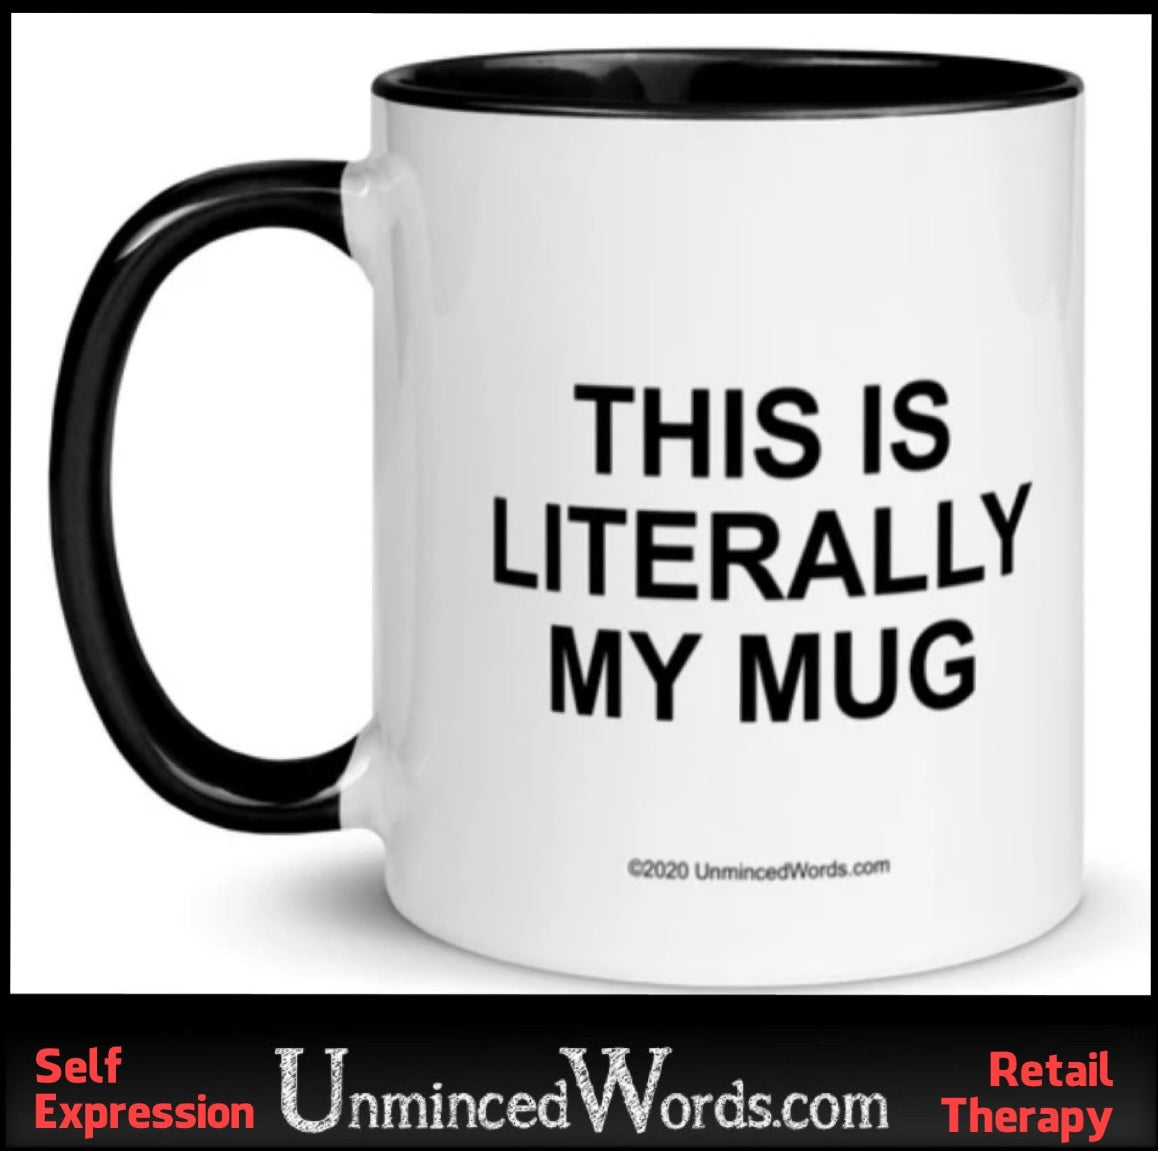 It’s the “This is LITERALLY my mug” mug